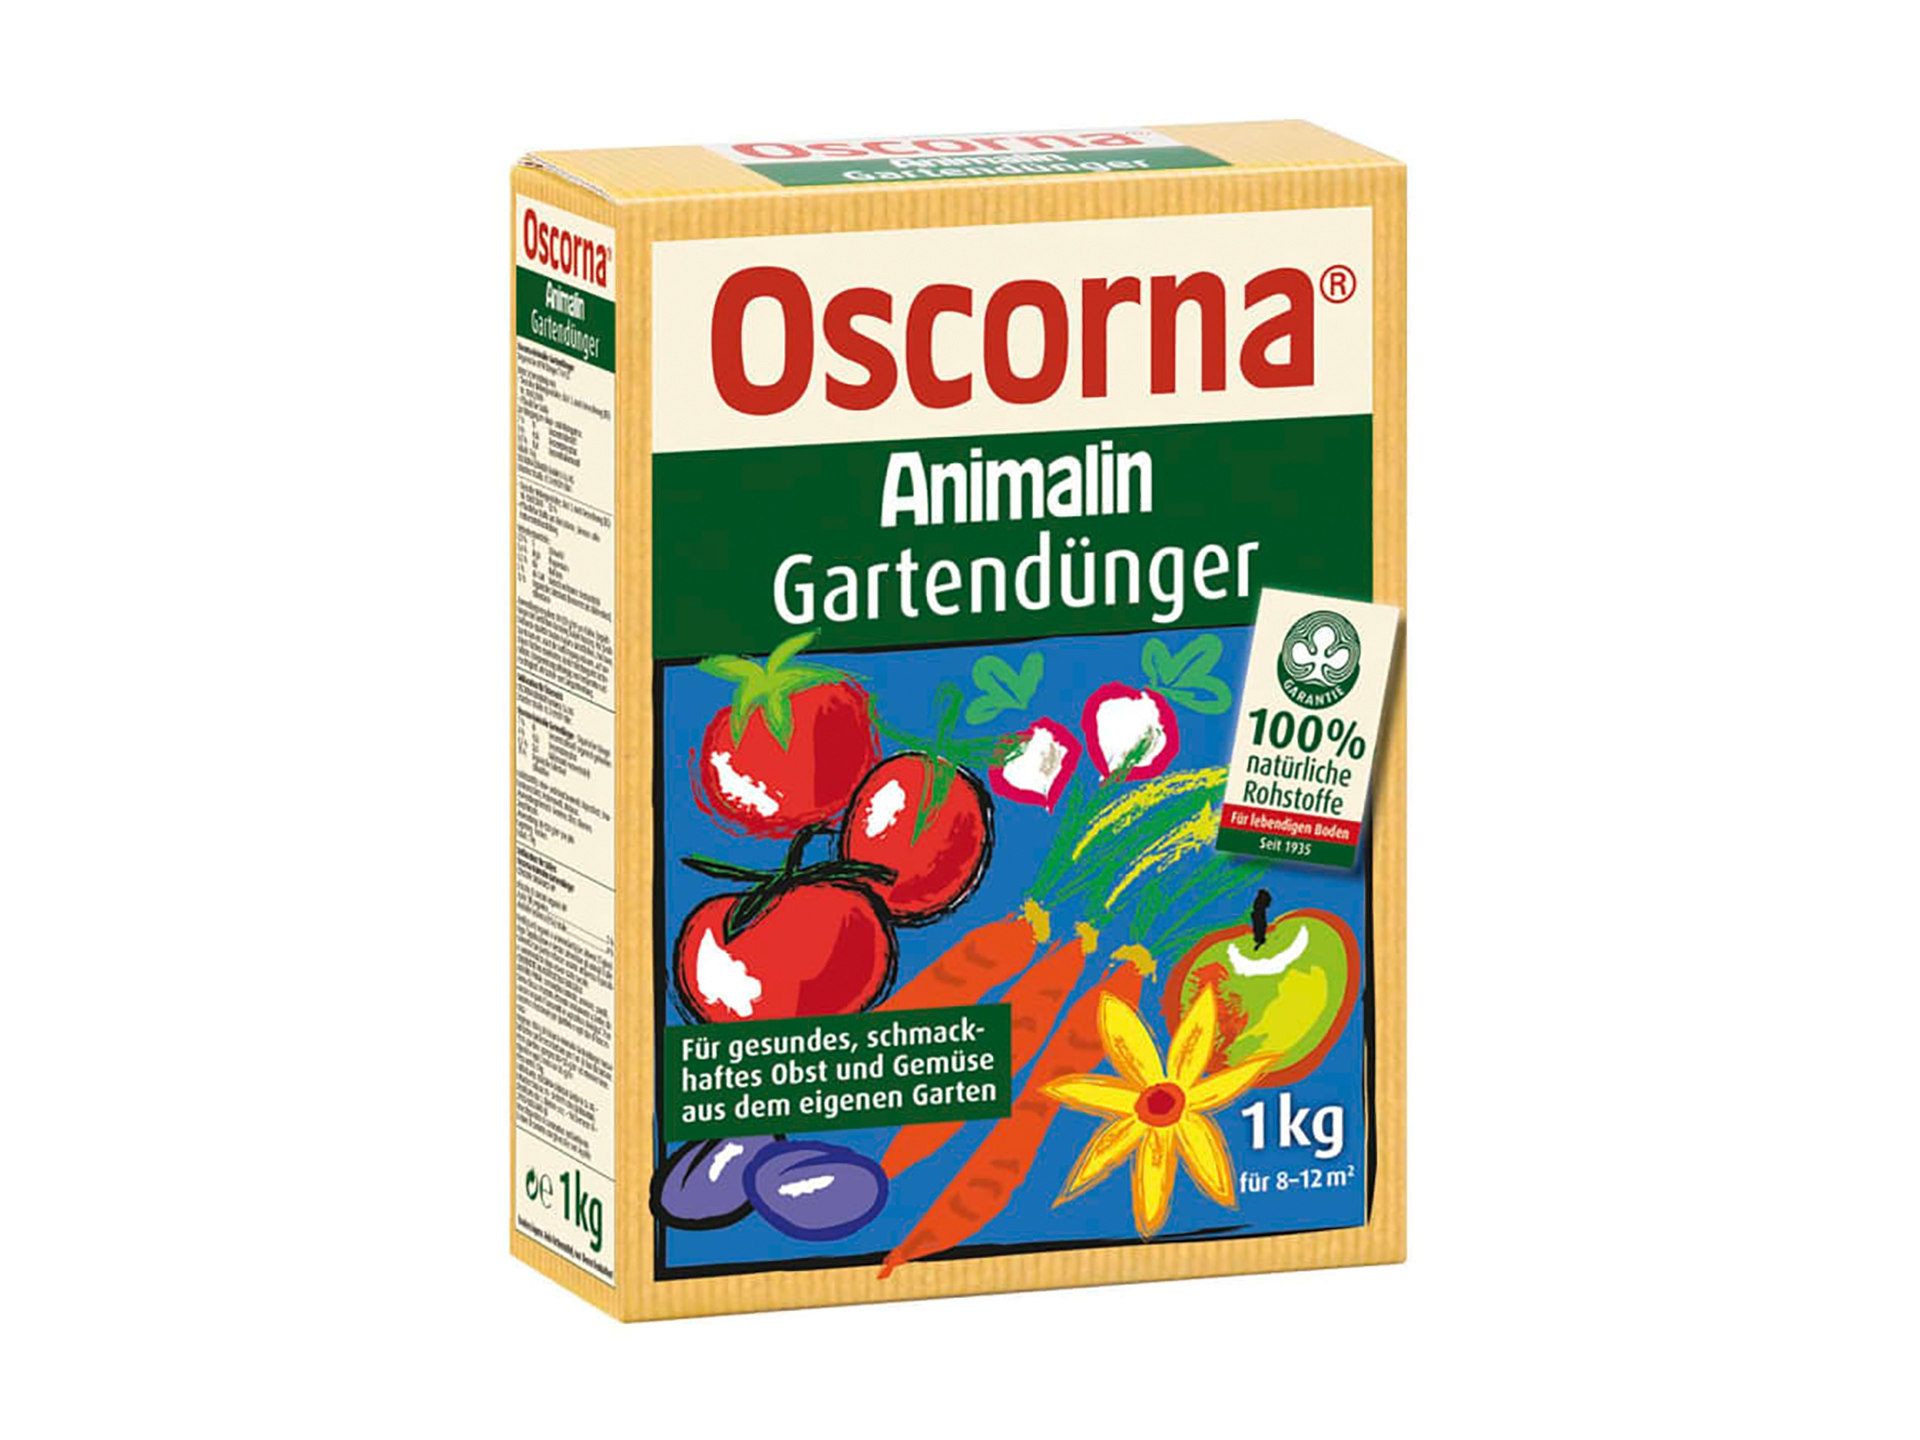 Oscorna Animalin Gartendünger 1kg